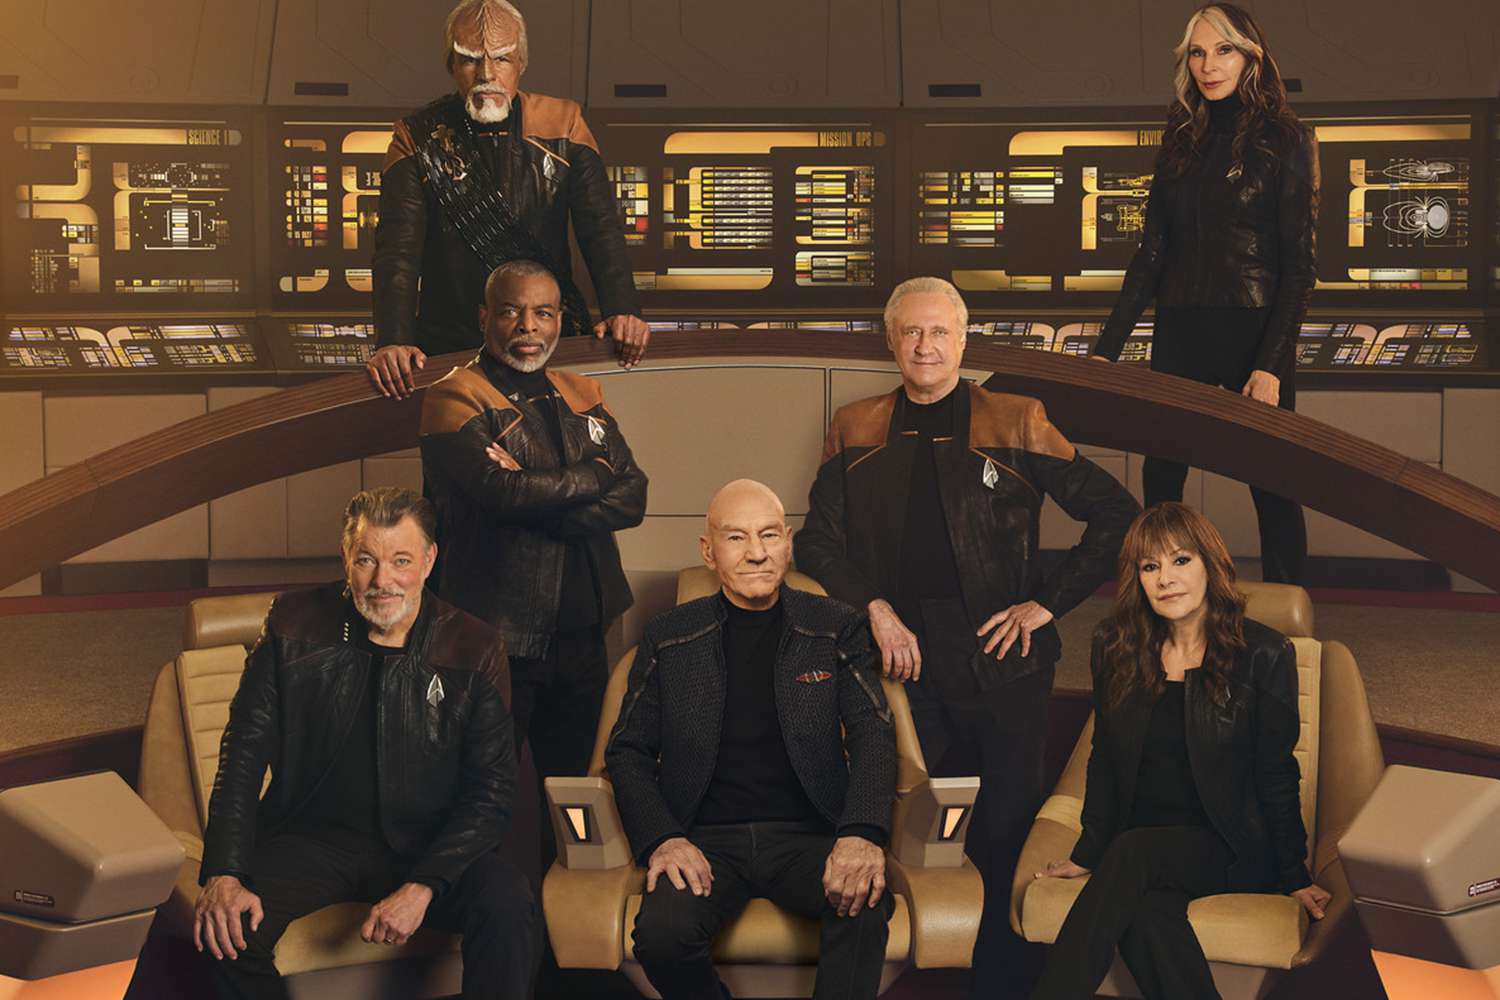 The Star Trek: The Next Generation cast on the bridge of the USS Enterprise-D in Star Trek: Picard season 3.